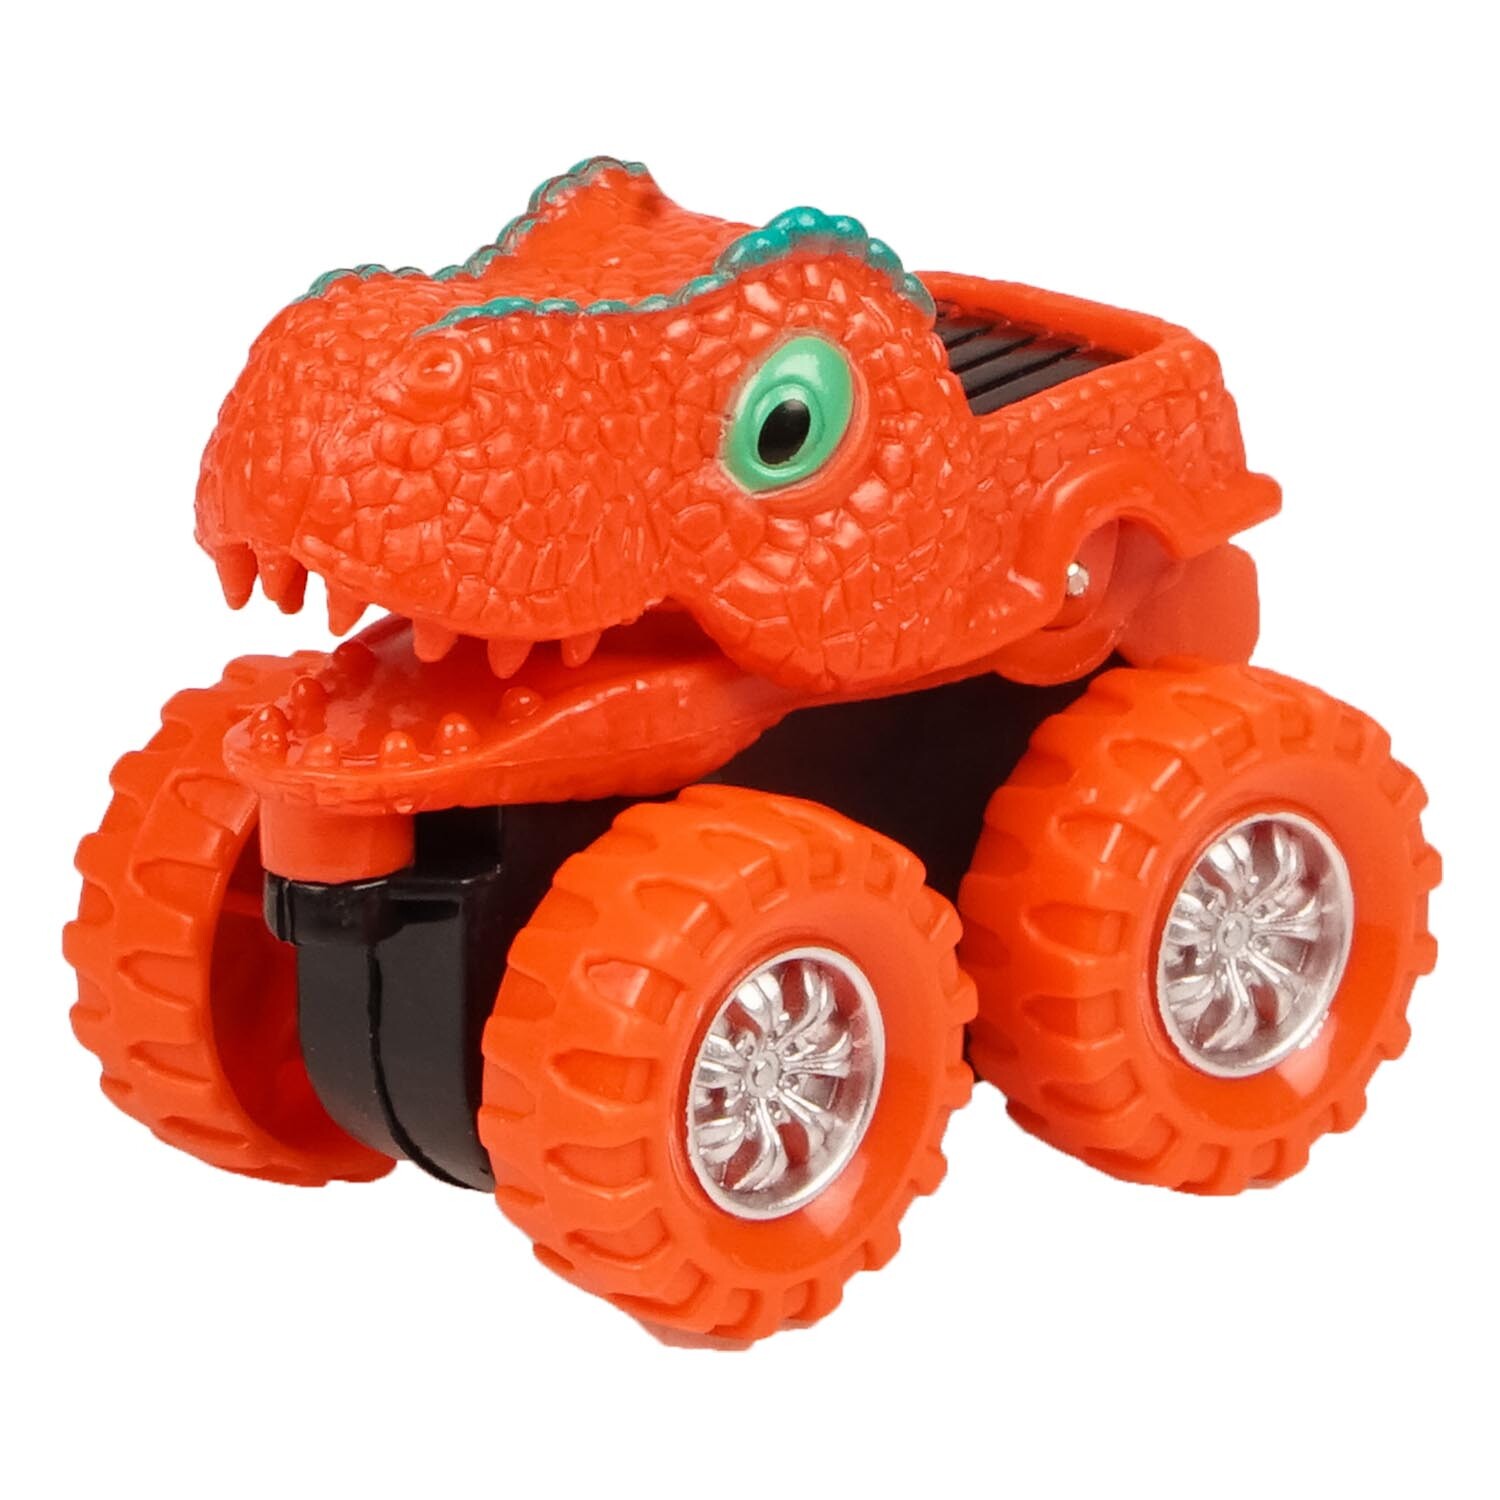 Tracksterz Multi Coloured Monster Trucks Toy 5 Pack Image 5